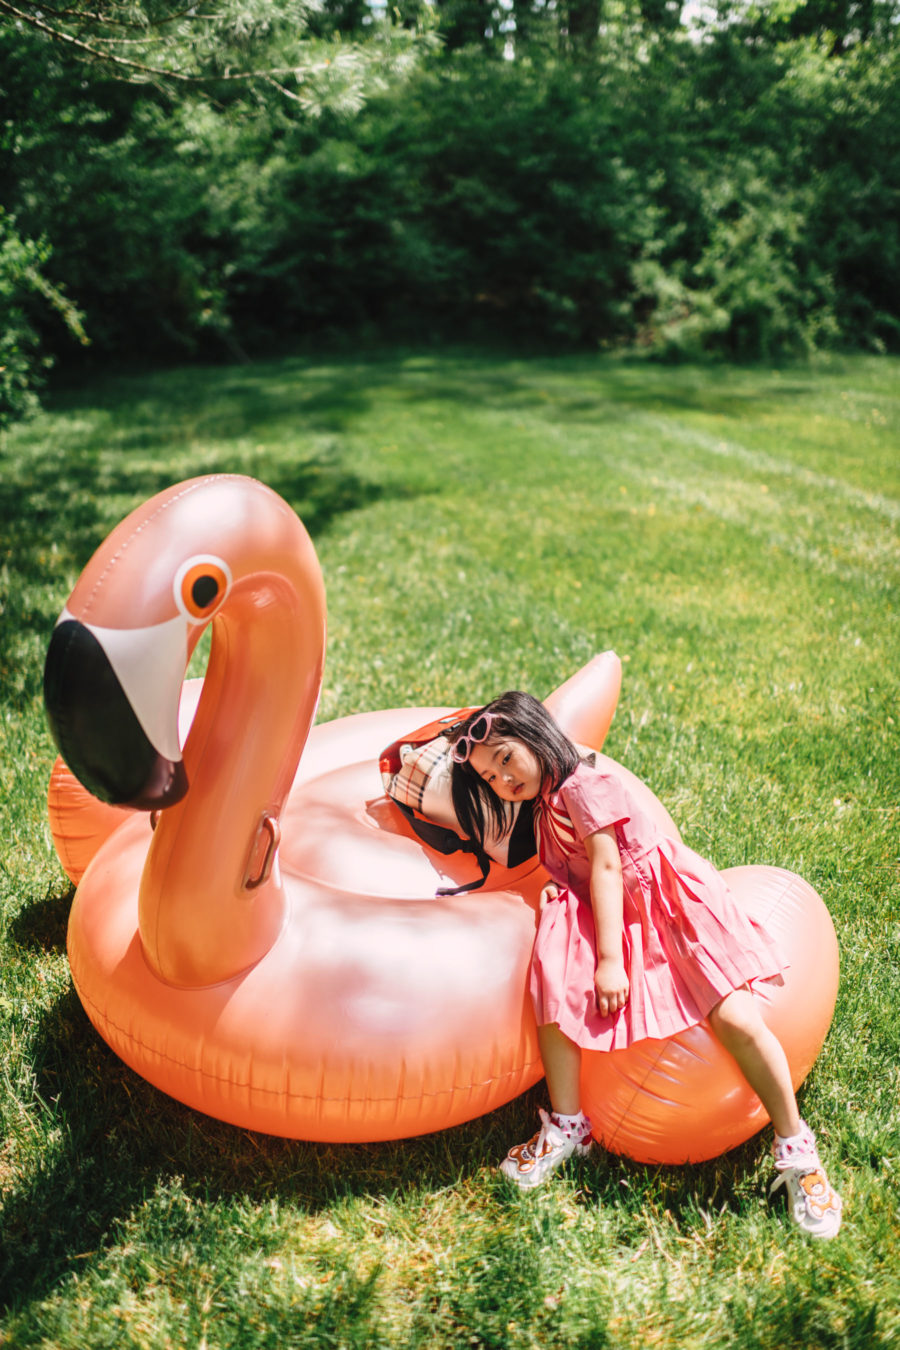 jessica wang's daughter wearing gucci dress on flamingo float // Jessica Wang - Notjessfashion.com